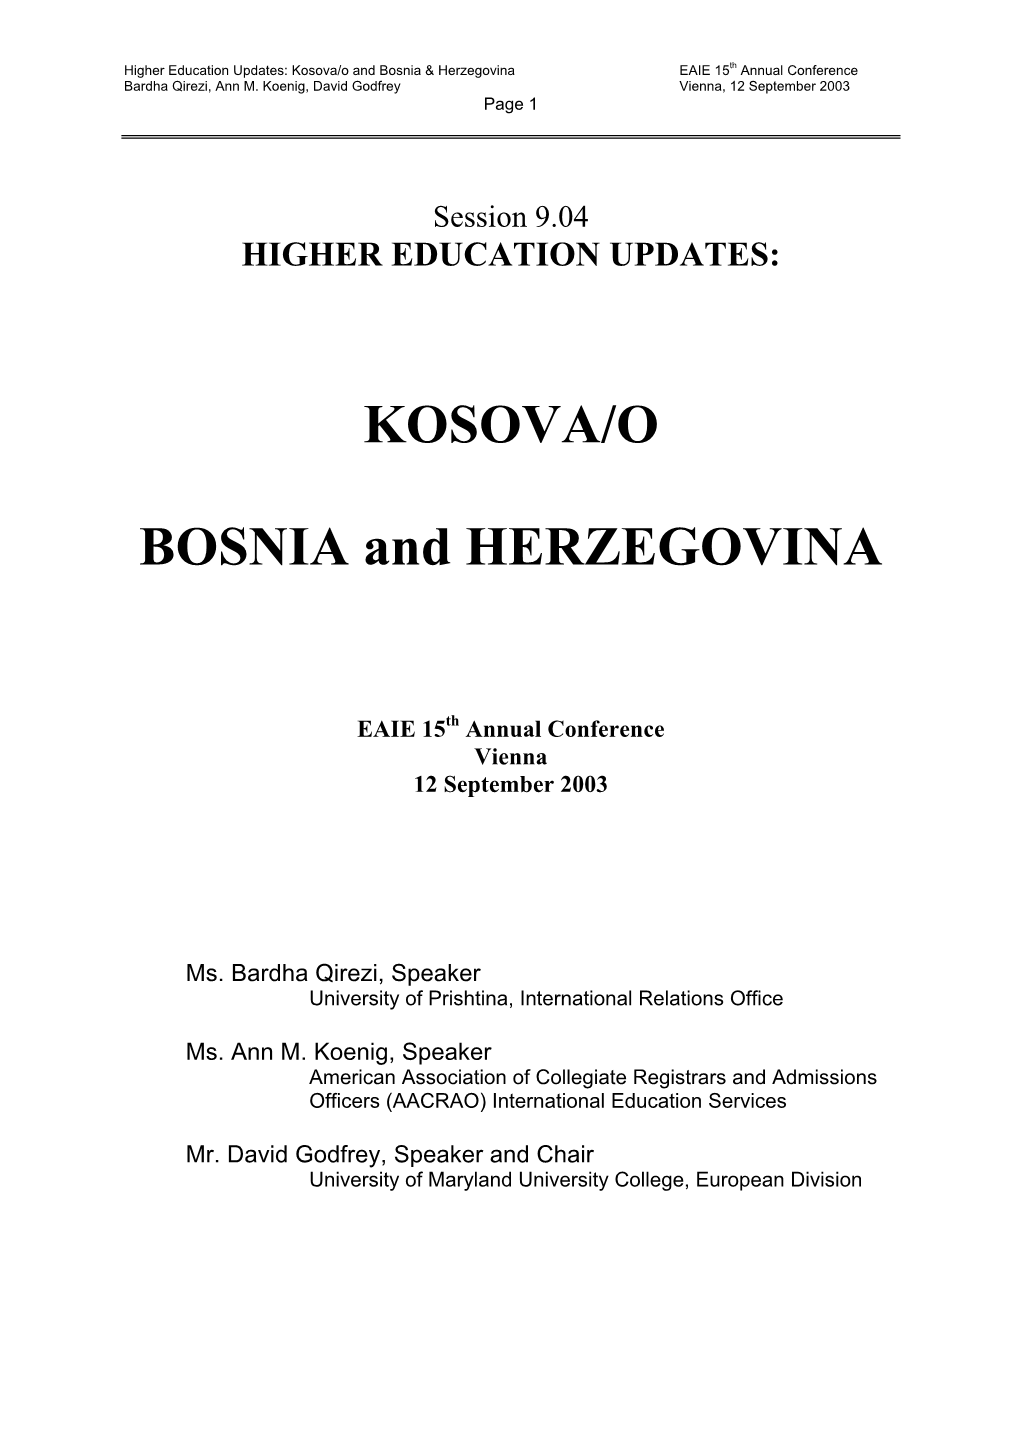 Kosovo and Bosnia-Herzegovina